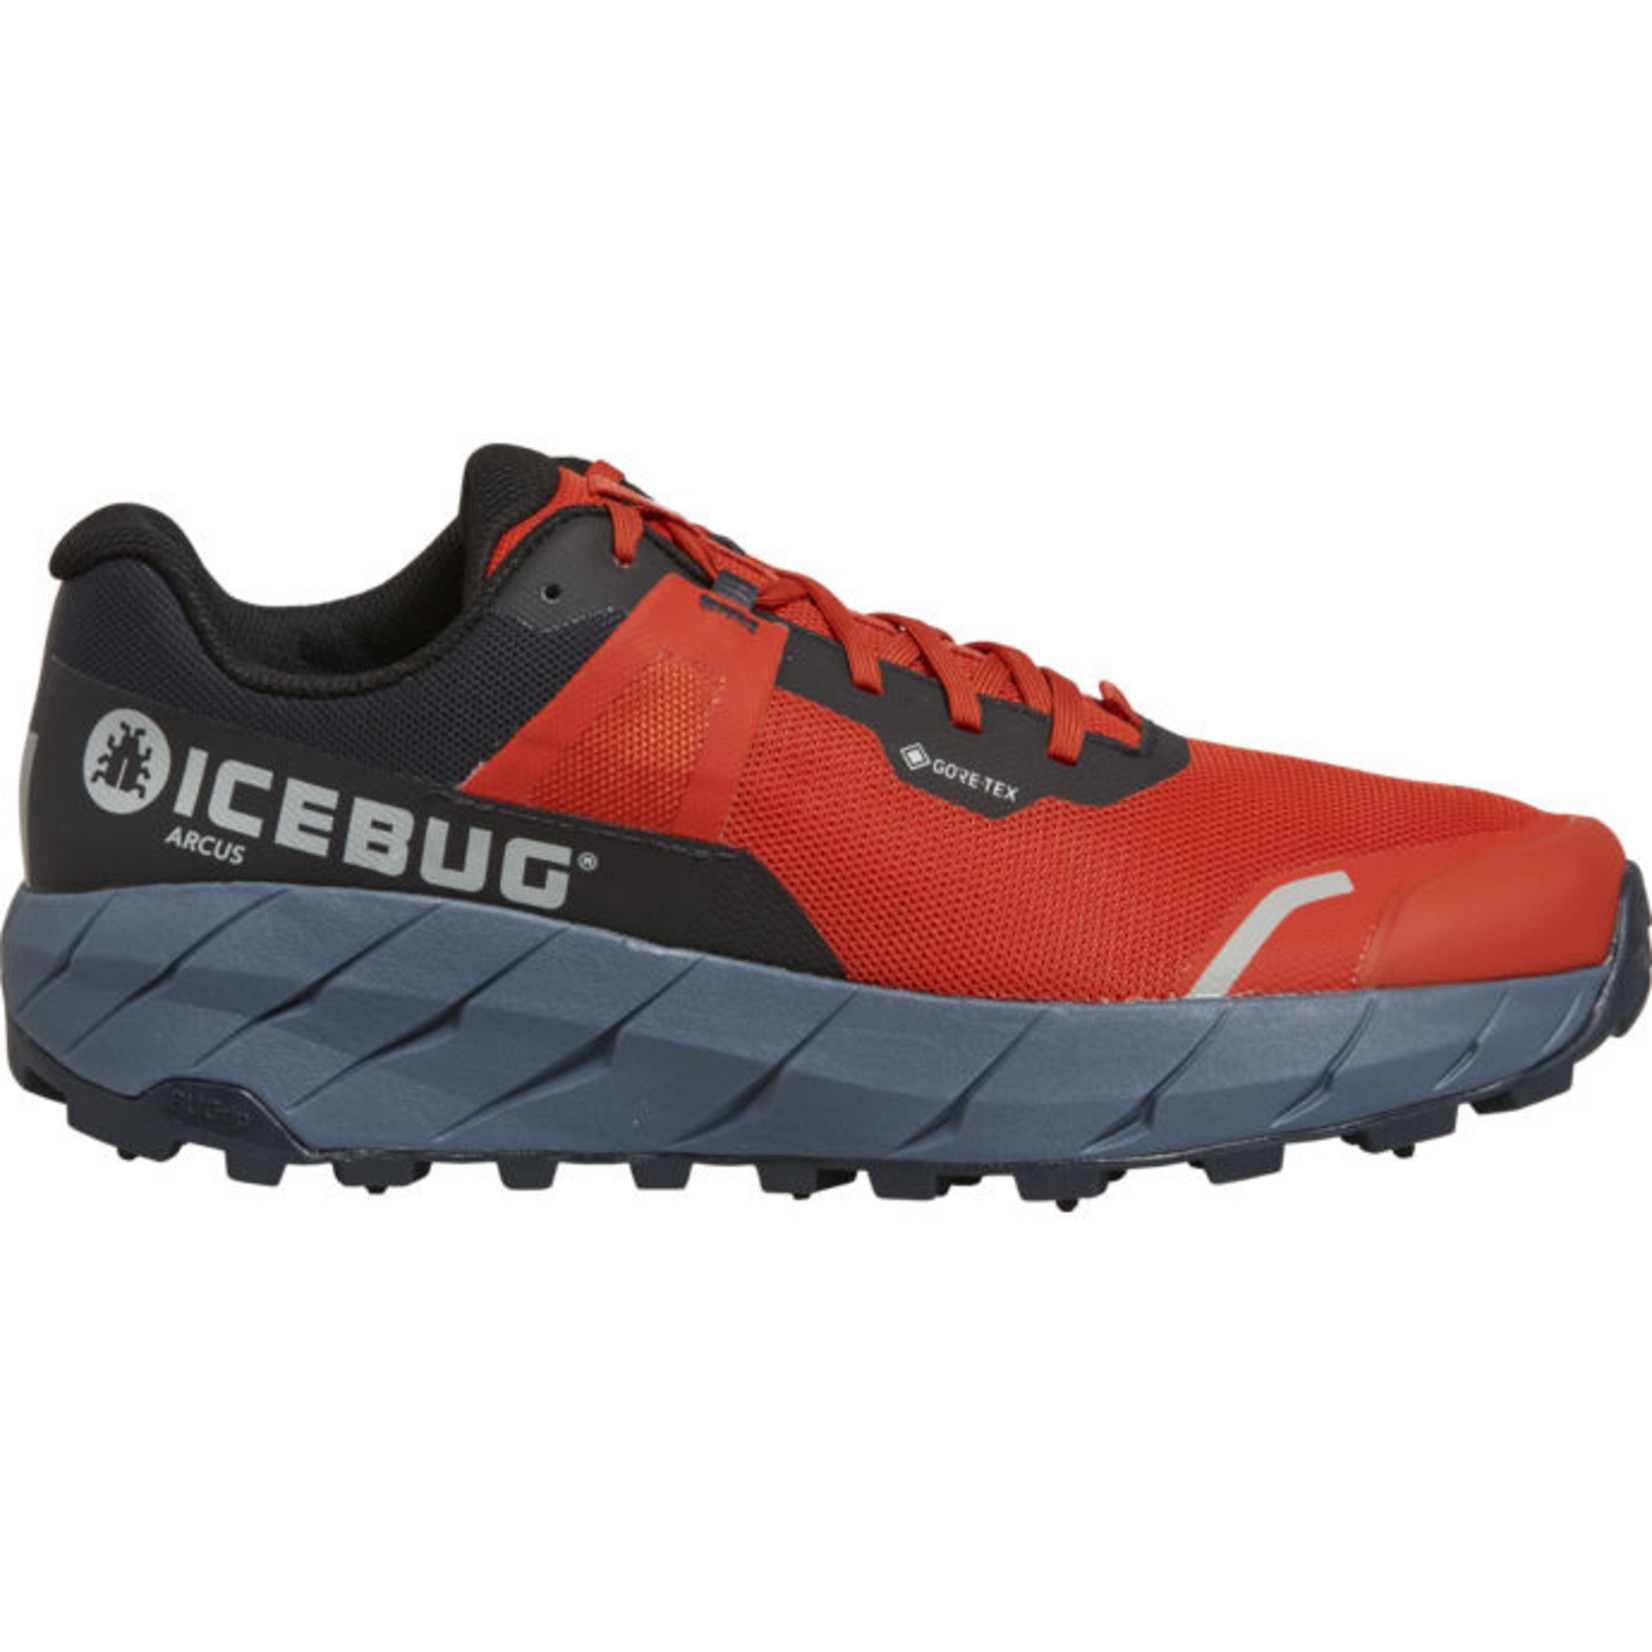 IceBug Arcus BUGrip GTX Men's Studded Running Shoe